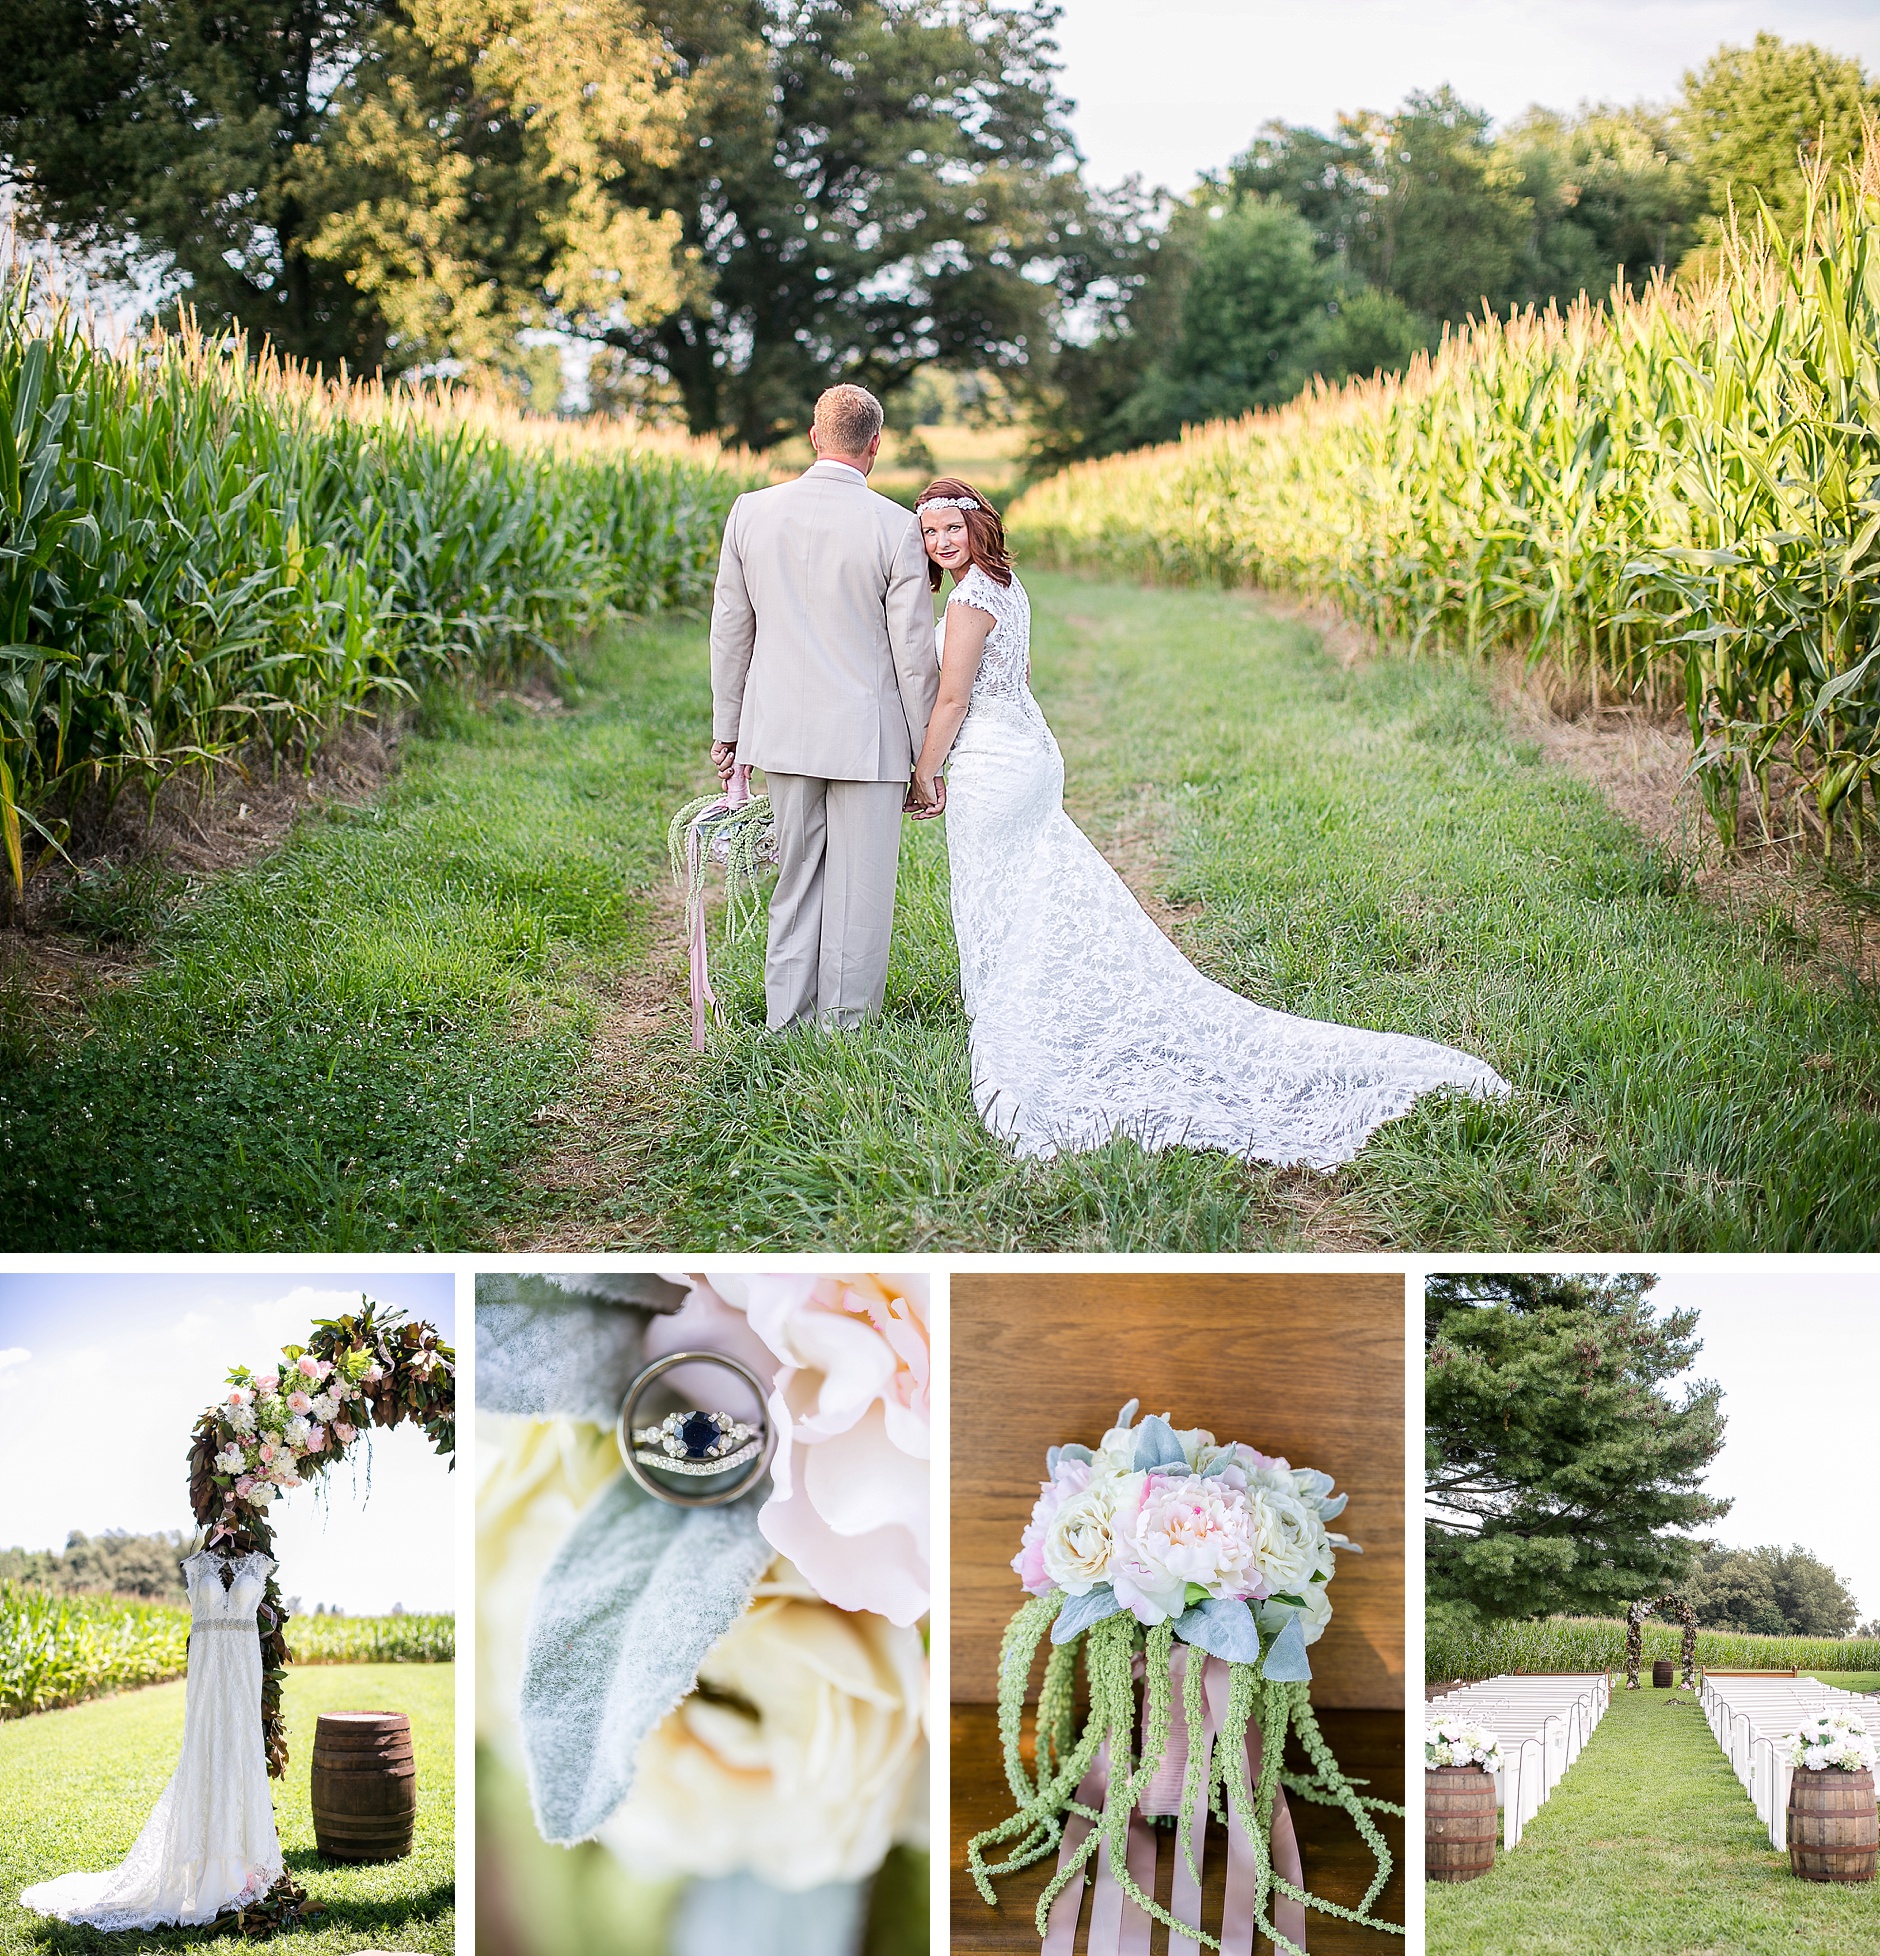 Best-of-Weddings-2015-Rachael-Houser-Photography_0011